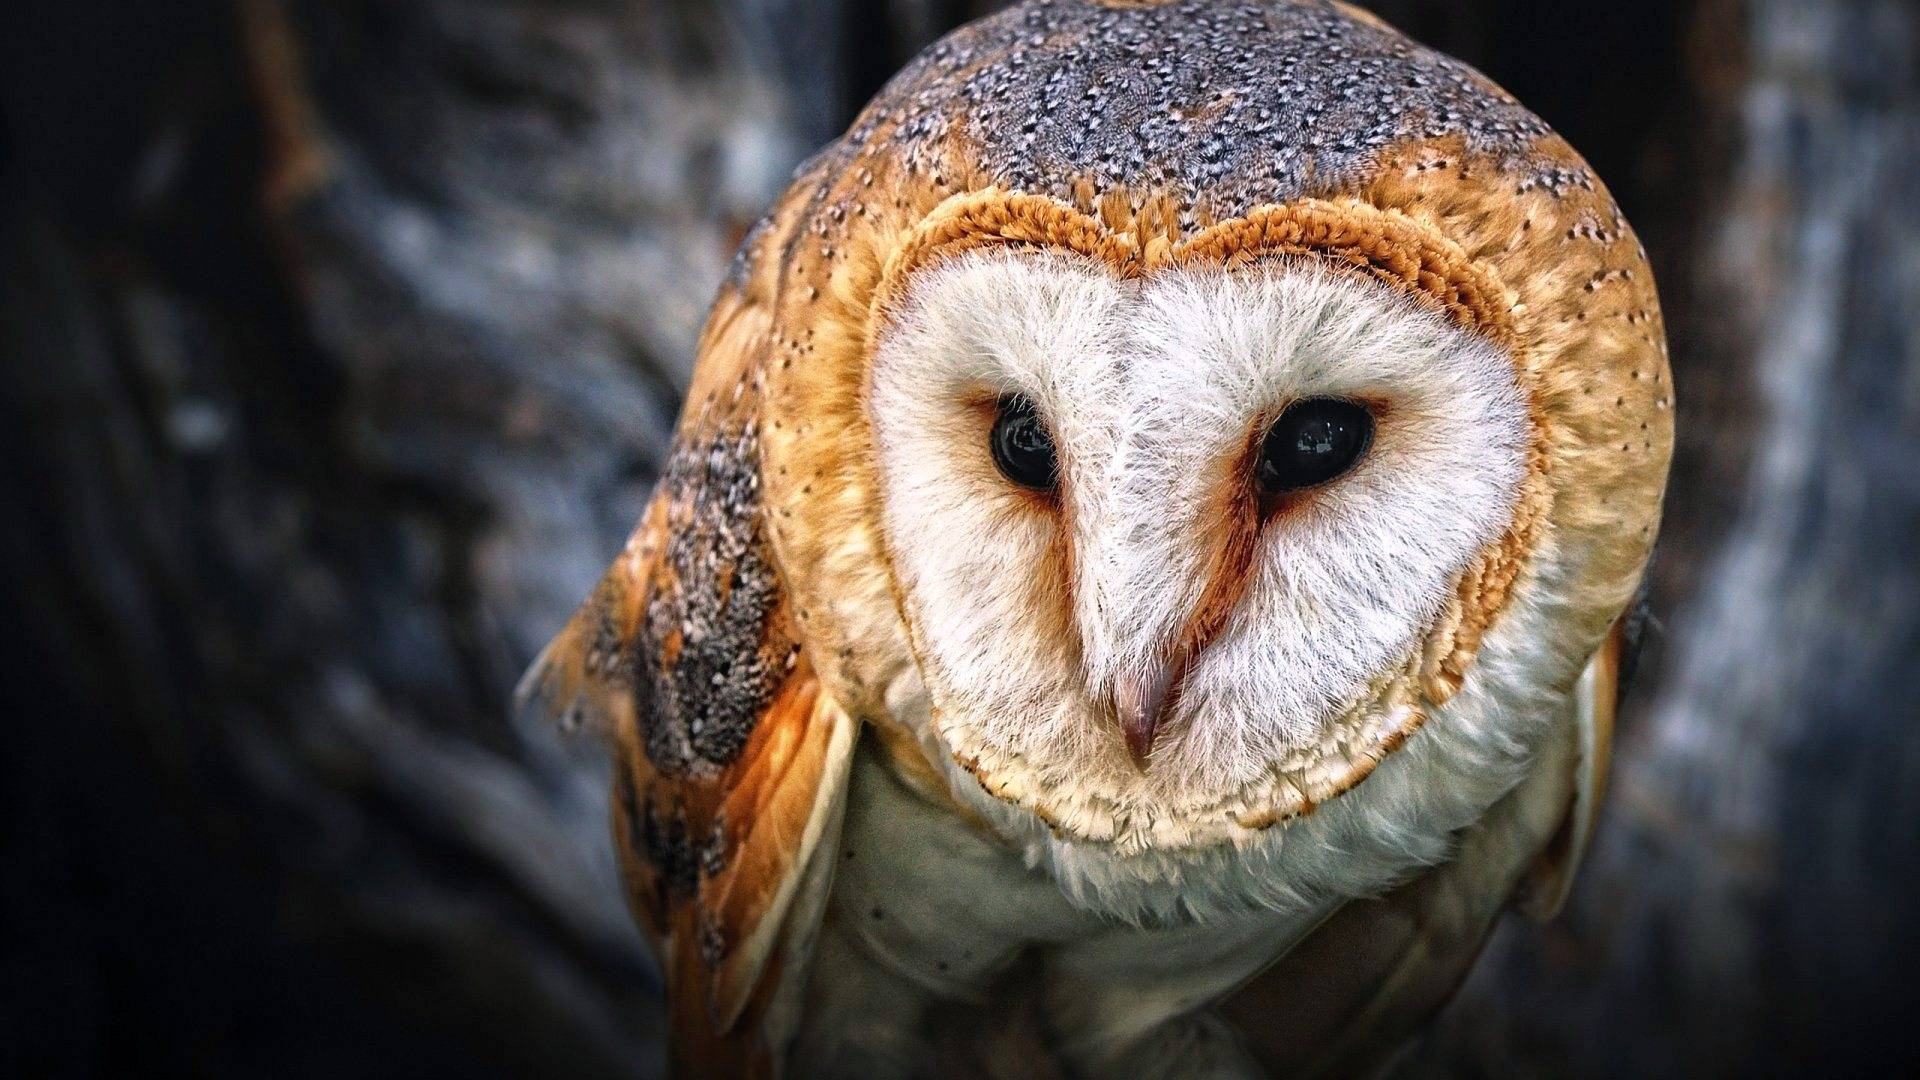 HD Cute Owl Images.